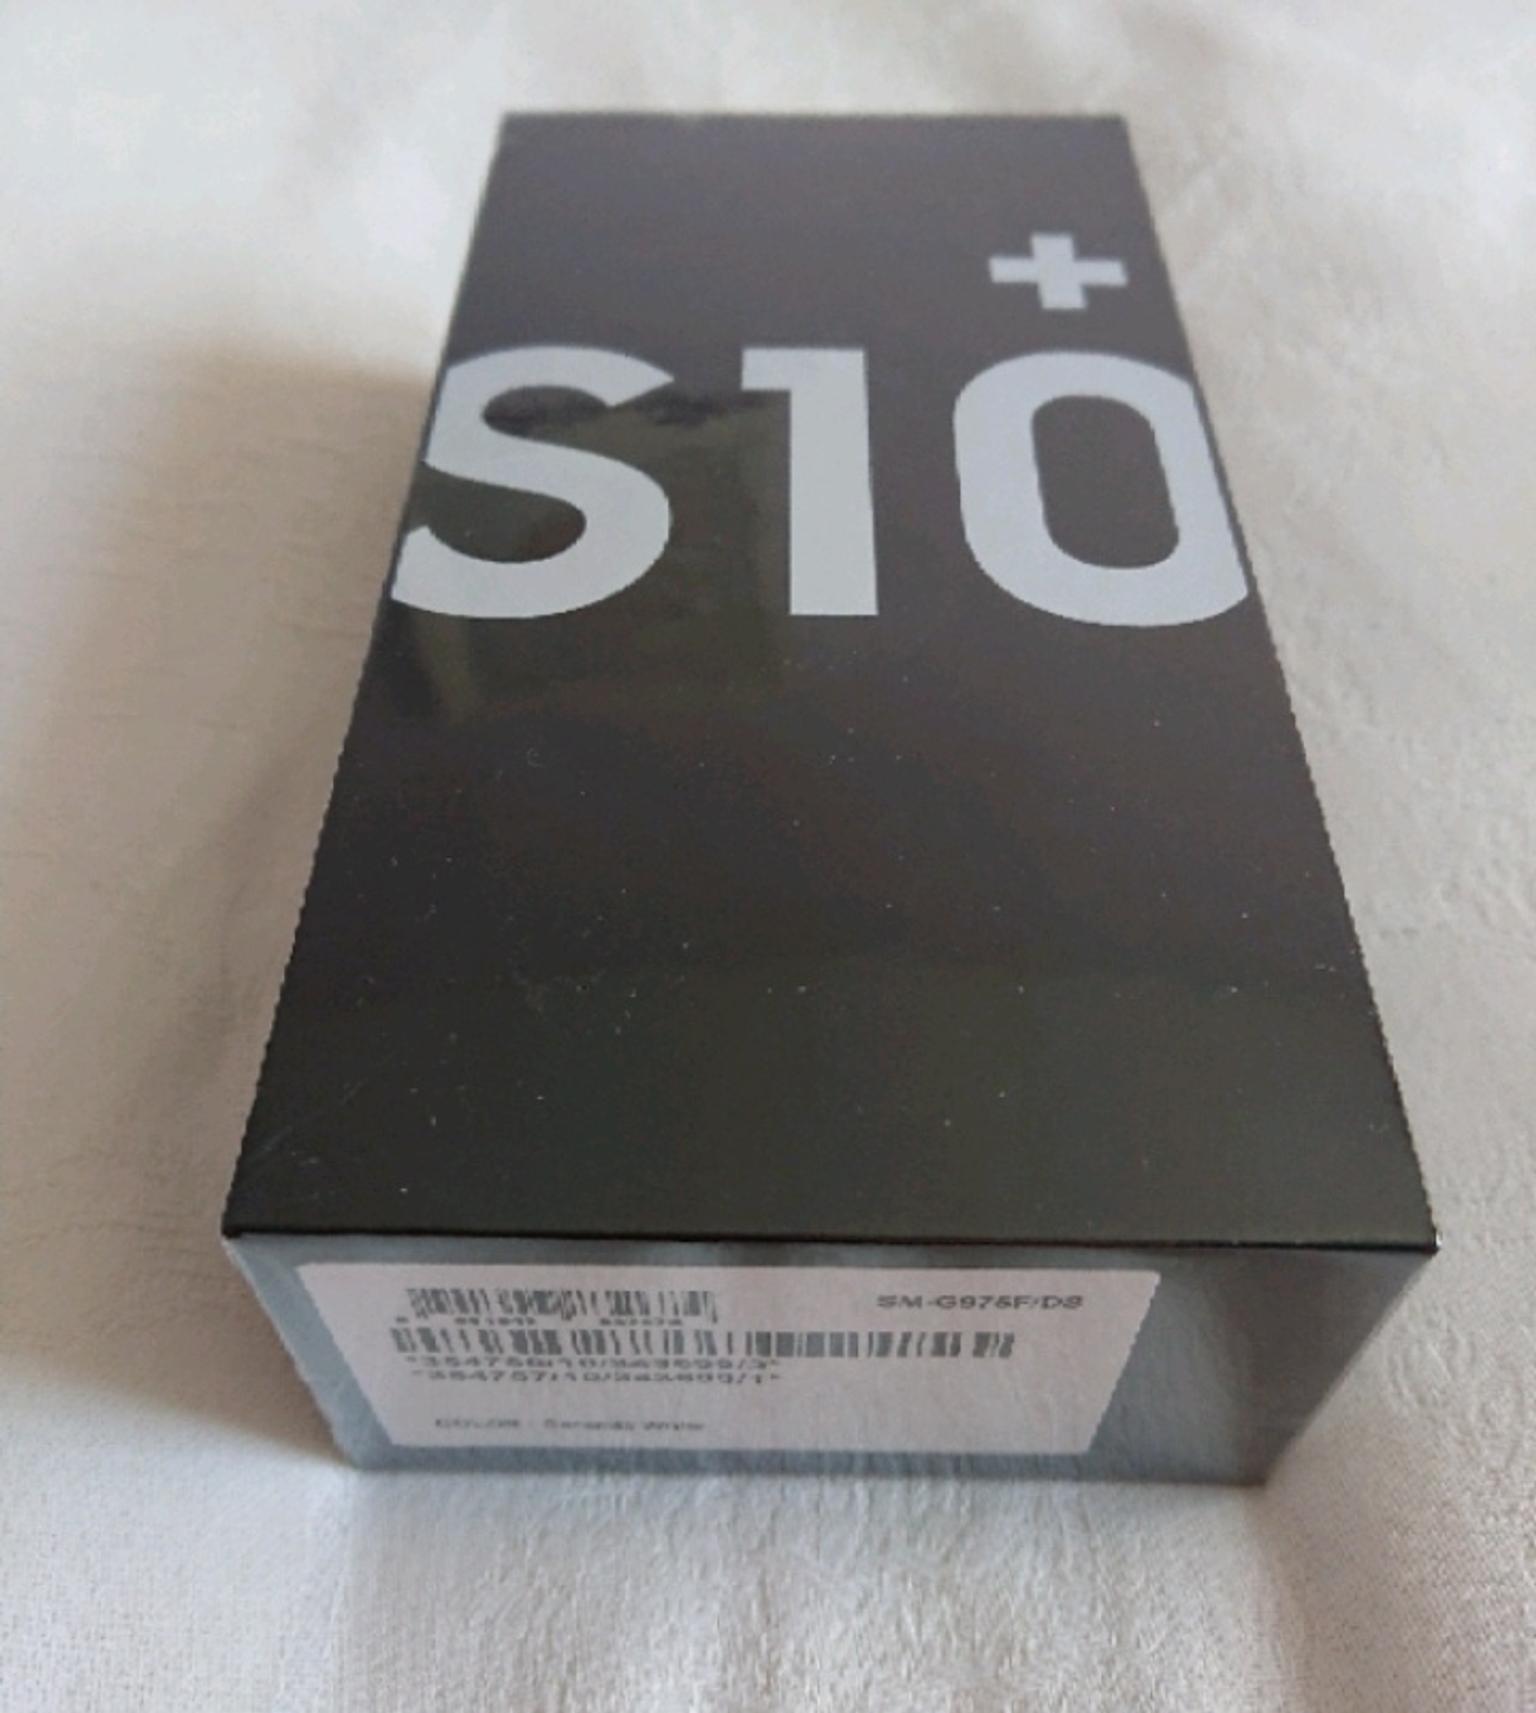 Samsung S10 Plus 512gb Ceramic White In Yo19 Selby For 800 00